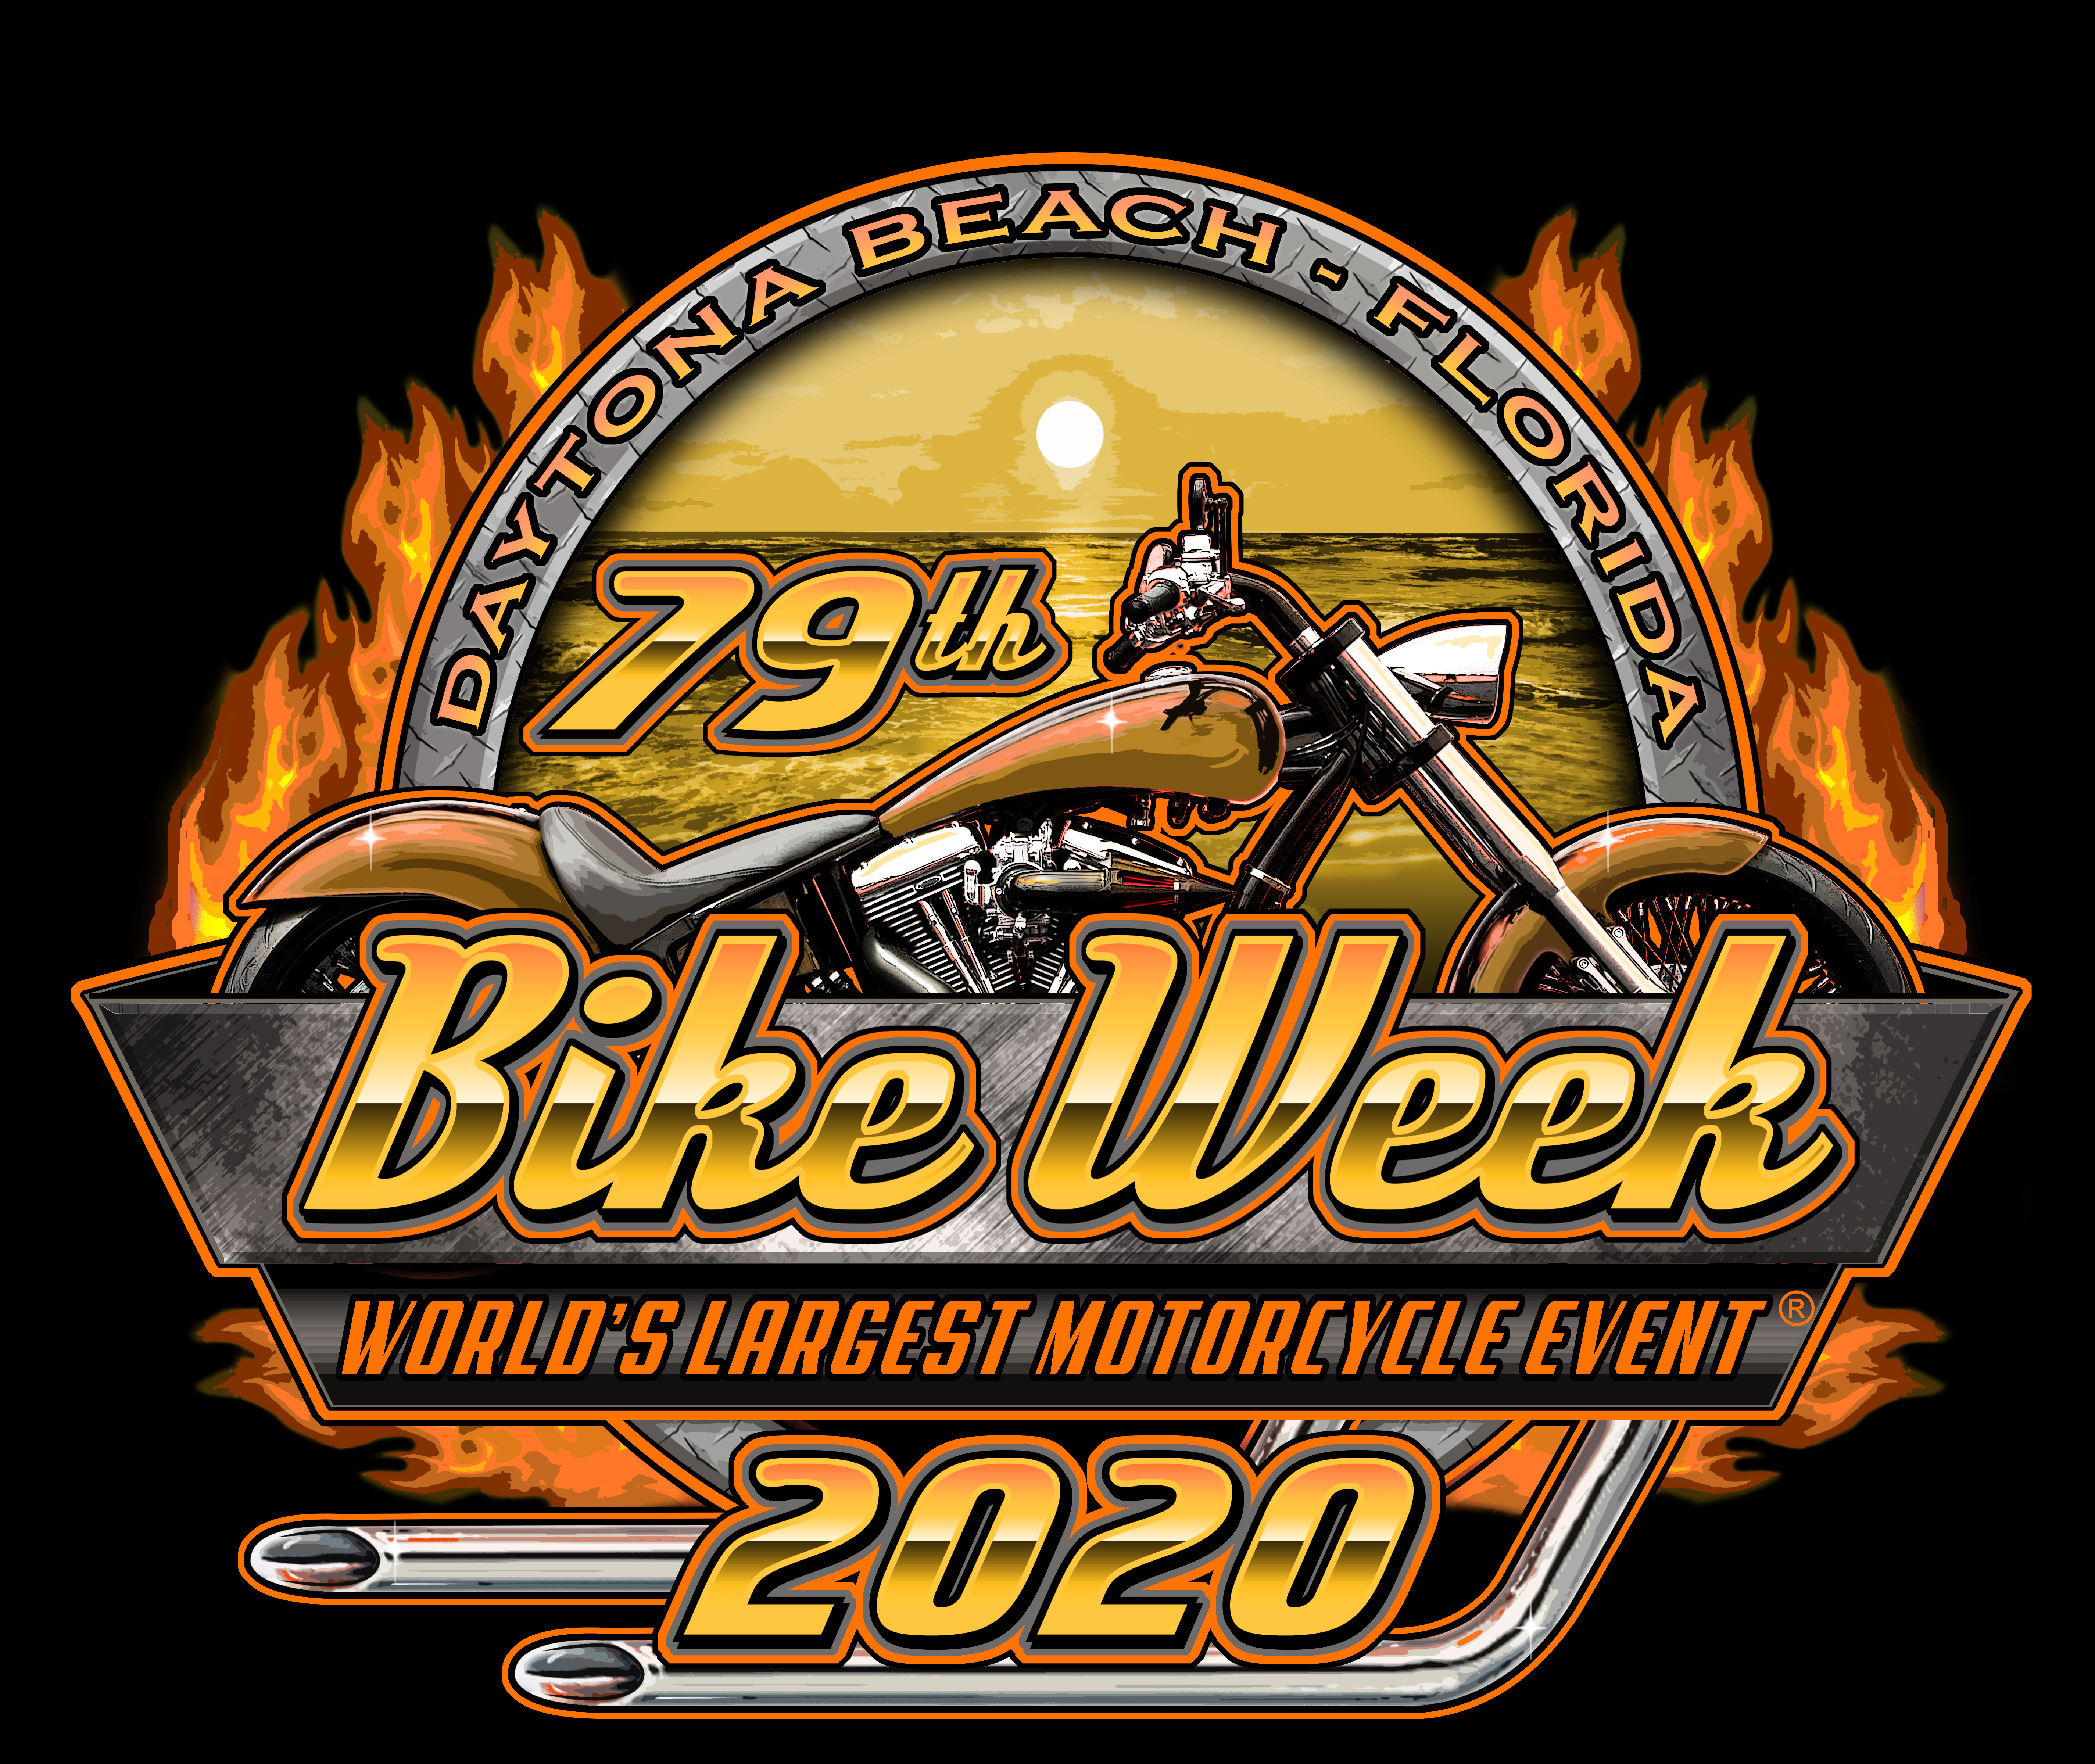 Daytona Bike Week News Official Bike Week Blog Official Bike Week Website